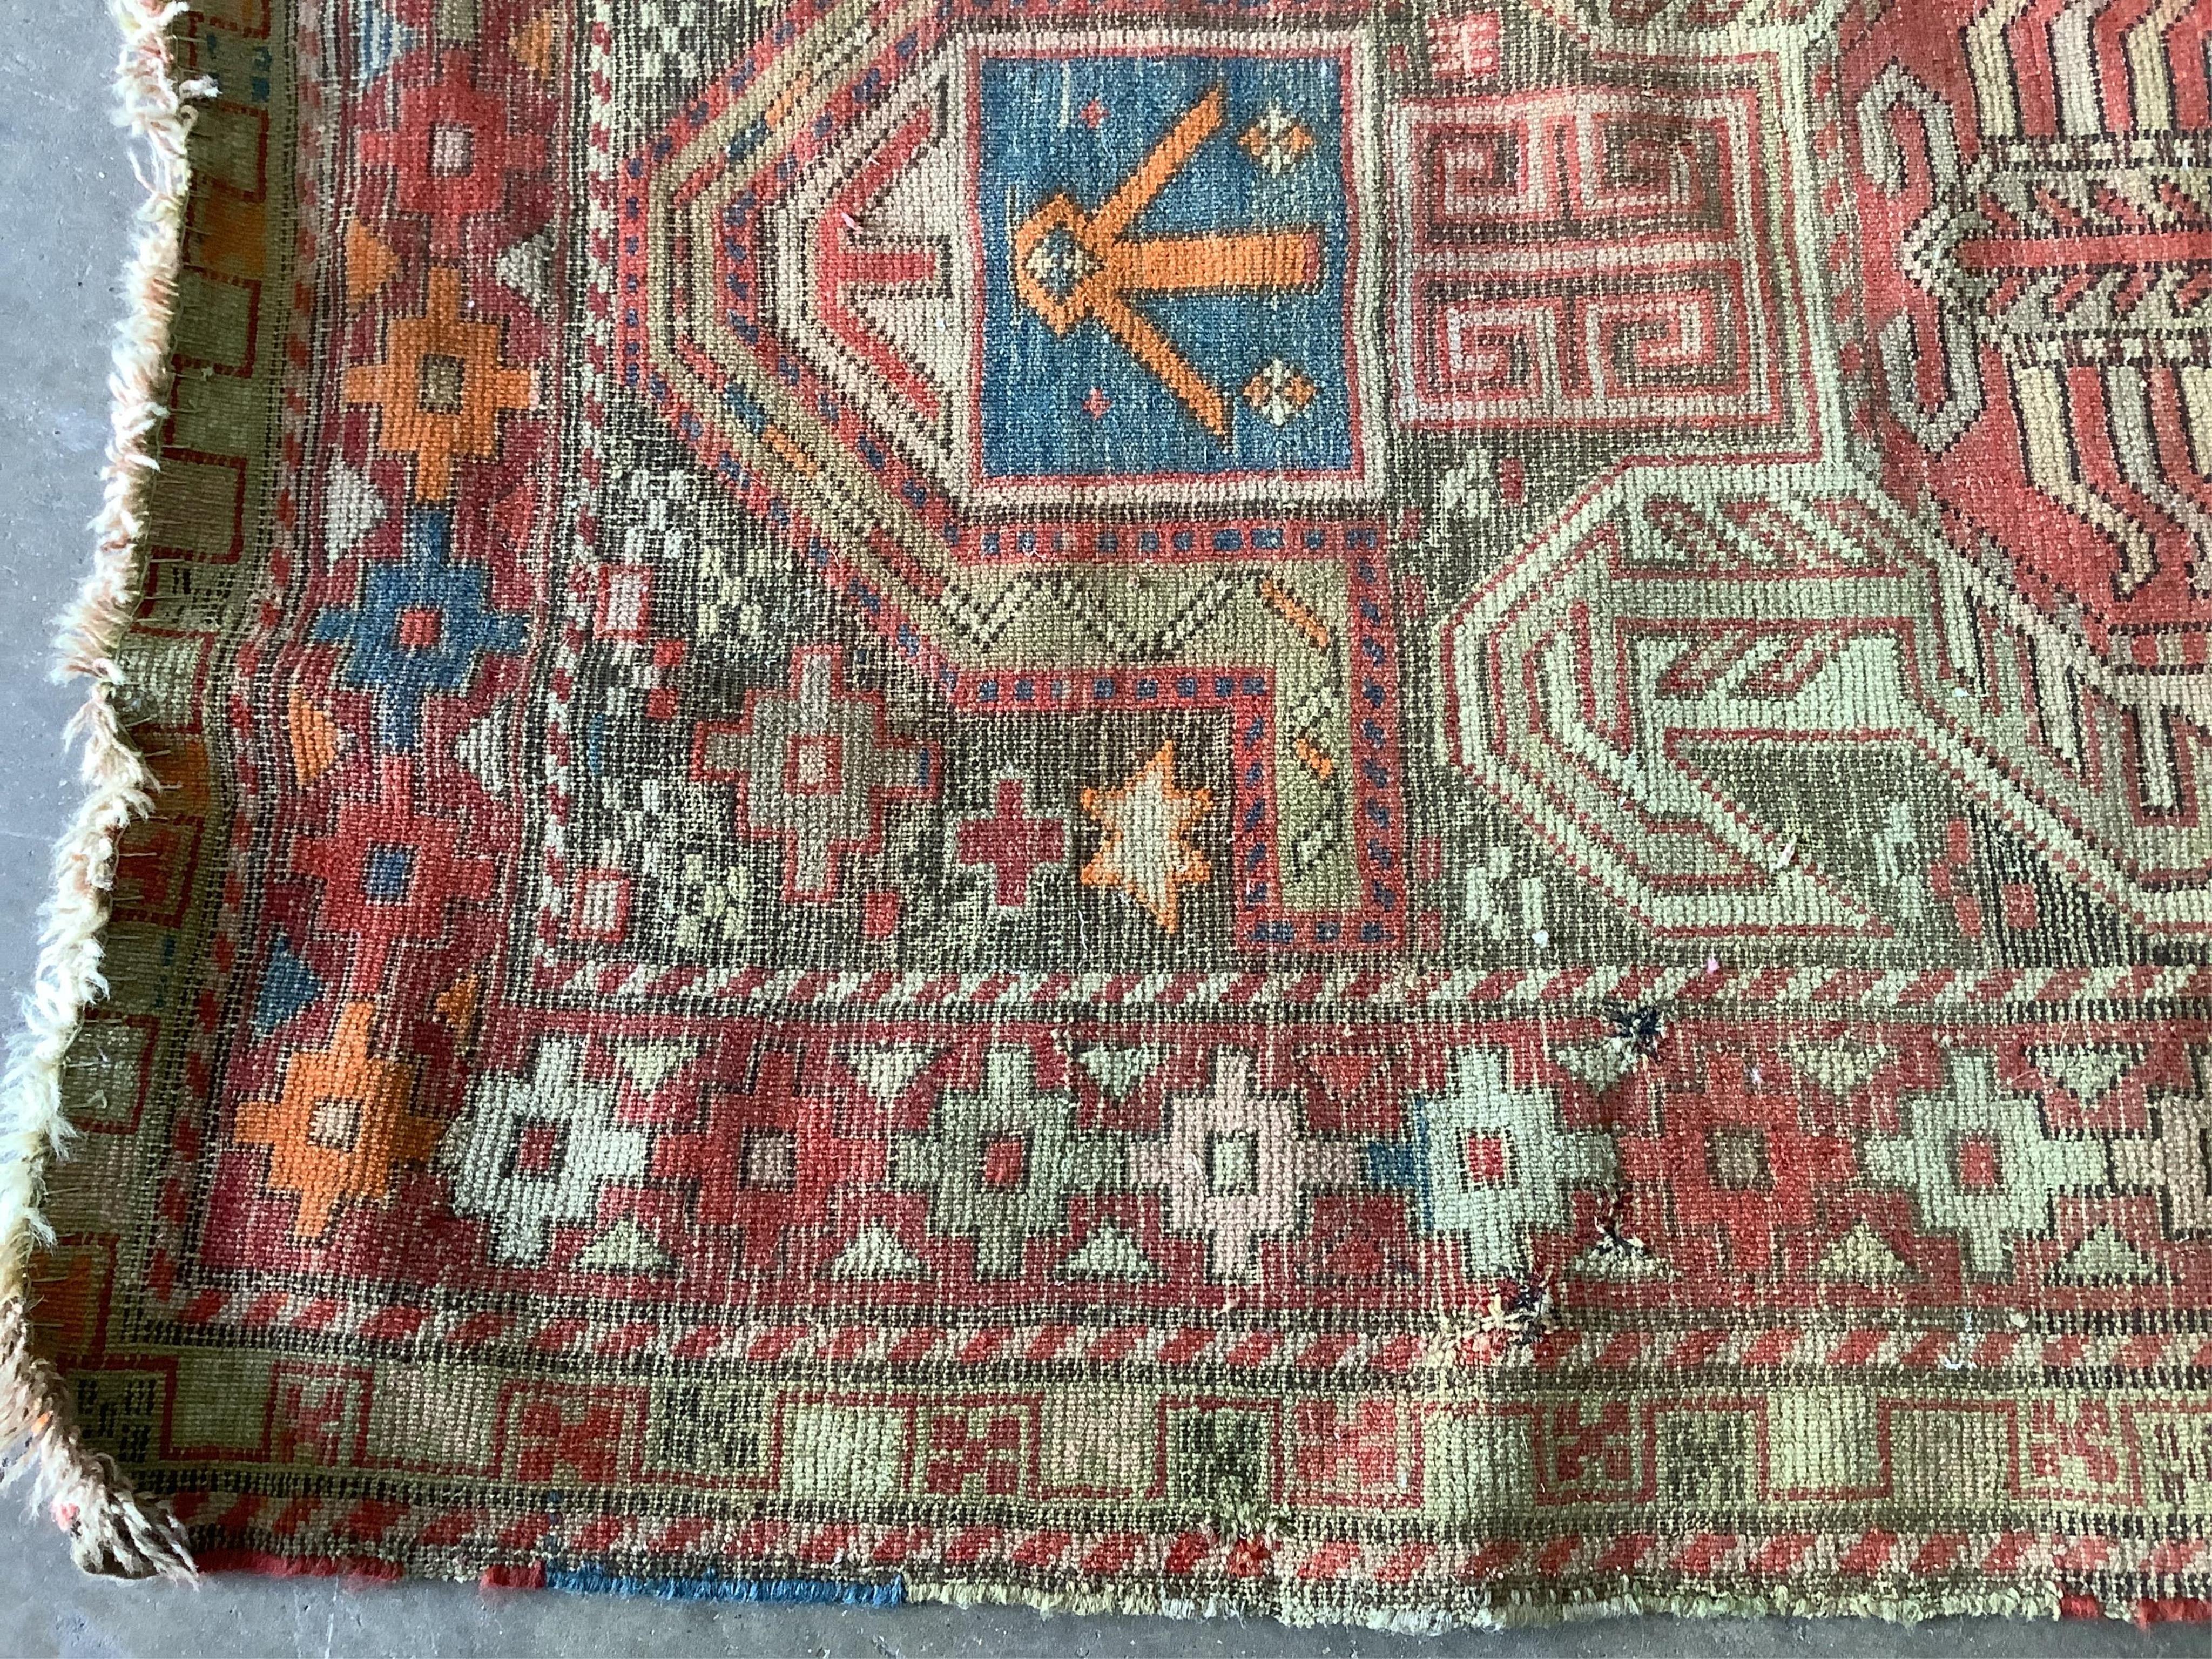 An antique Lenkoran prayer rug, 122 x 93cm. Condition - fair